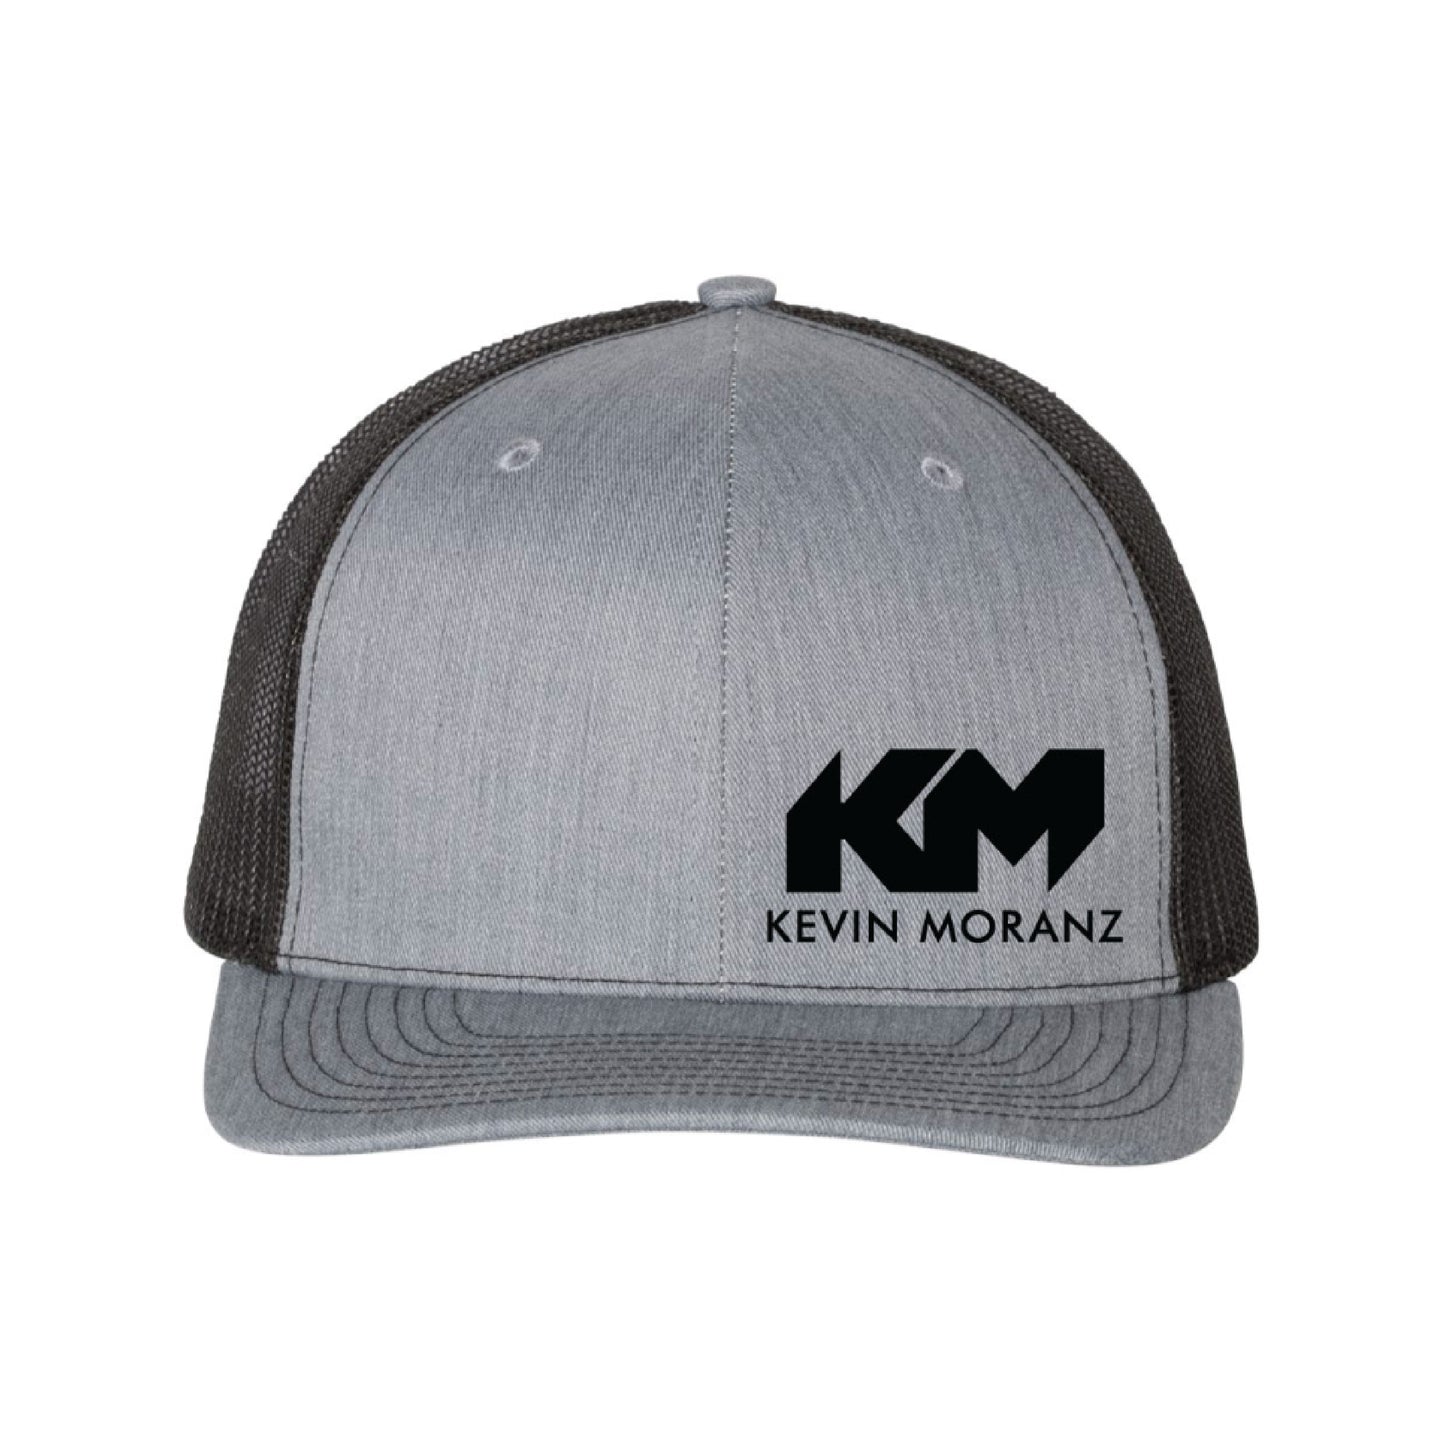 KM Curved Bill Hat - BEST SELLER